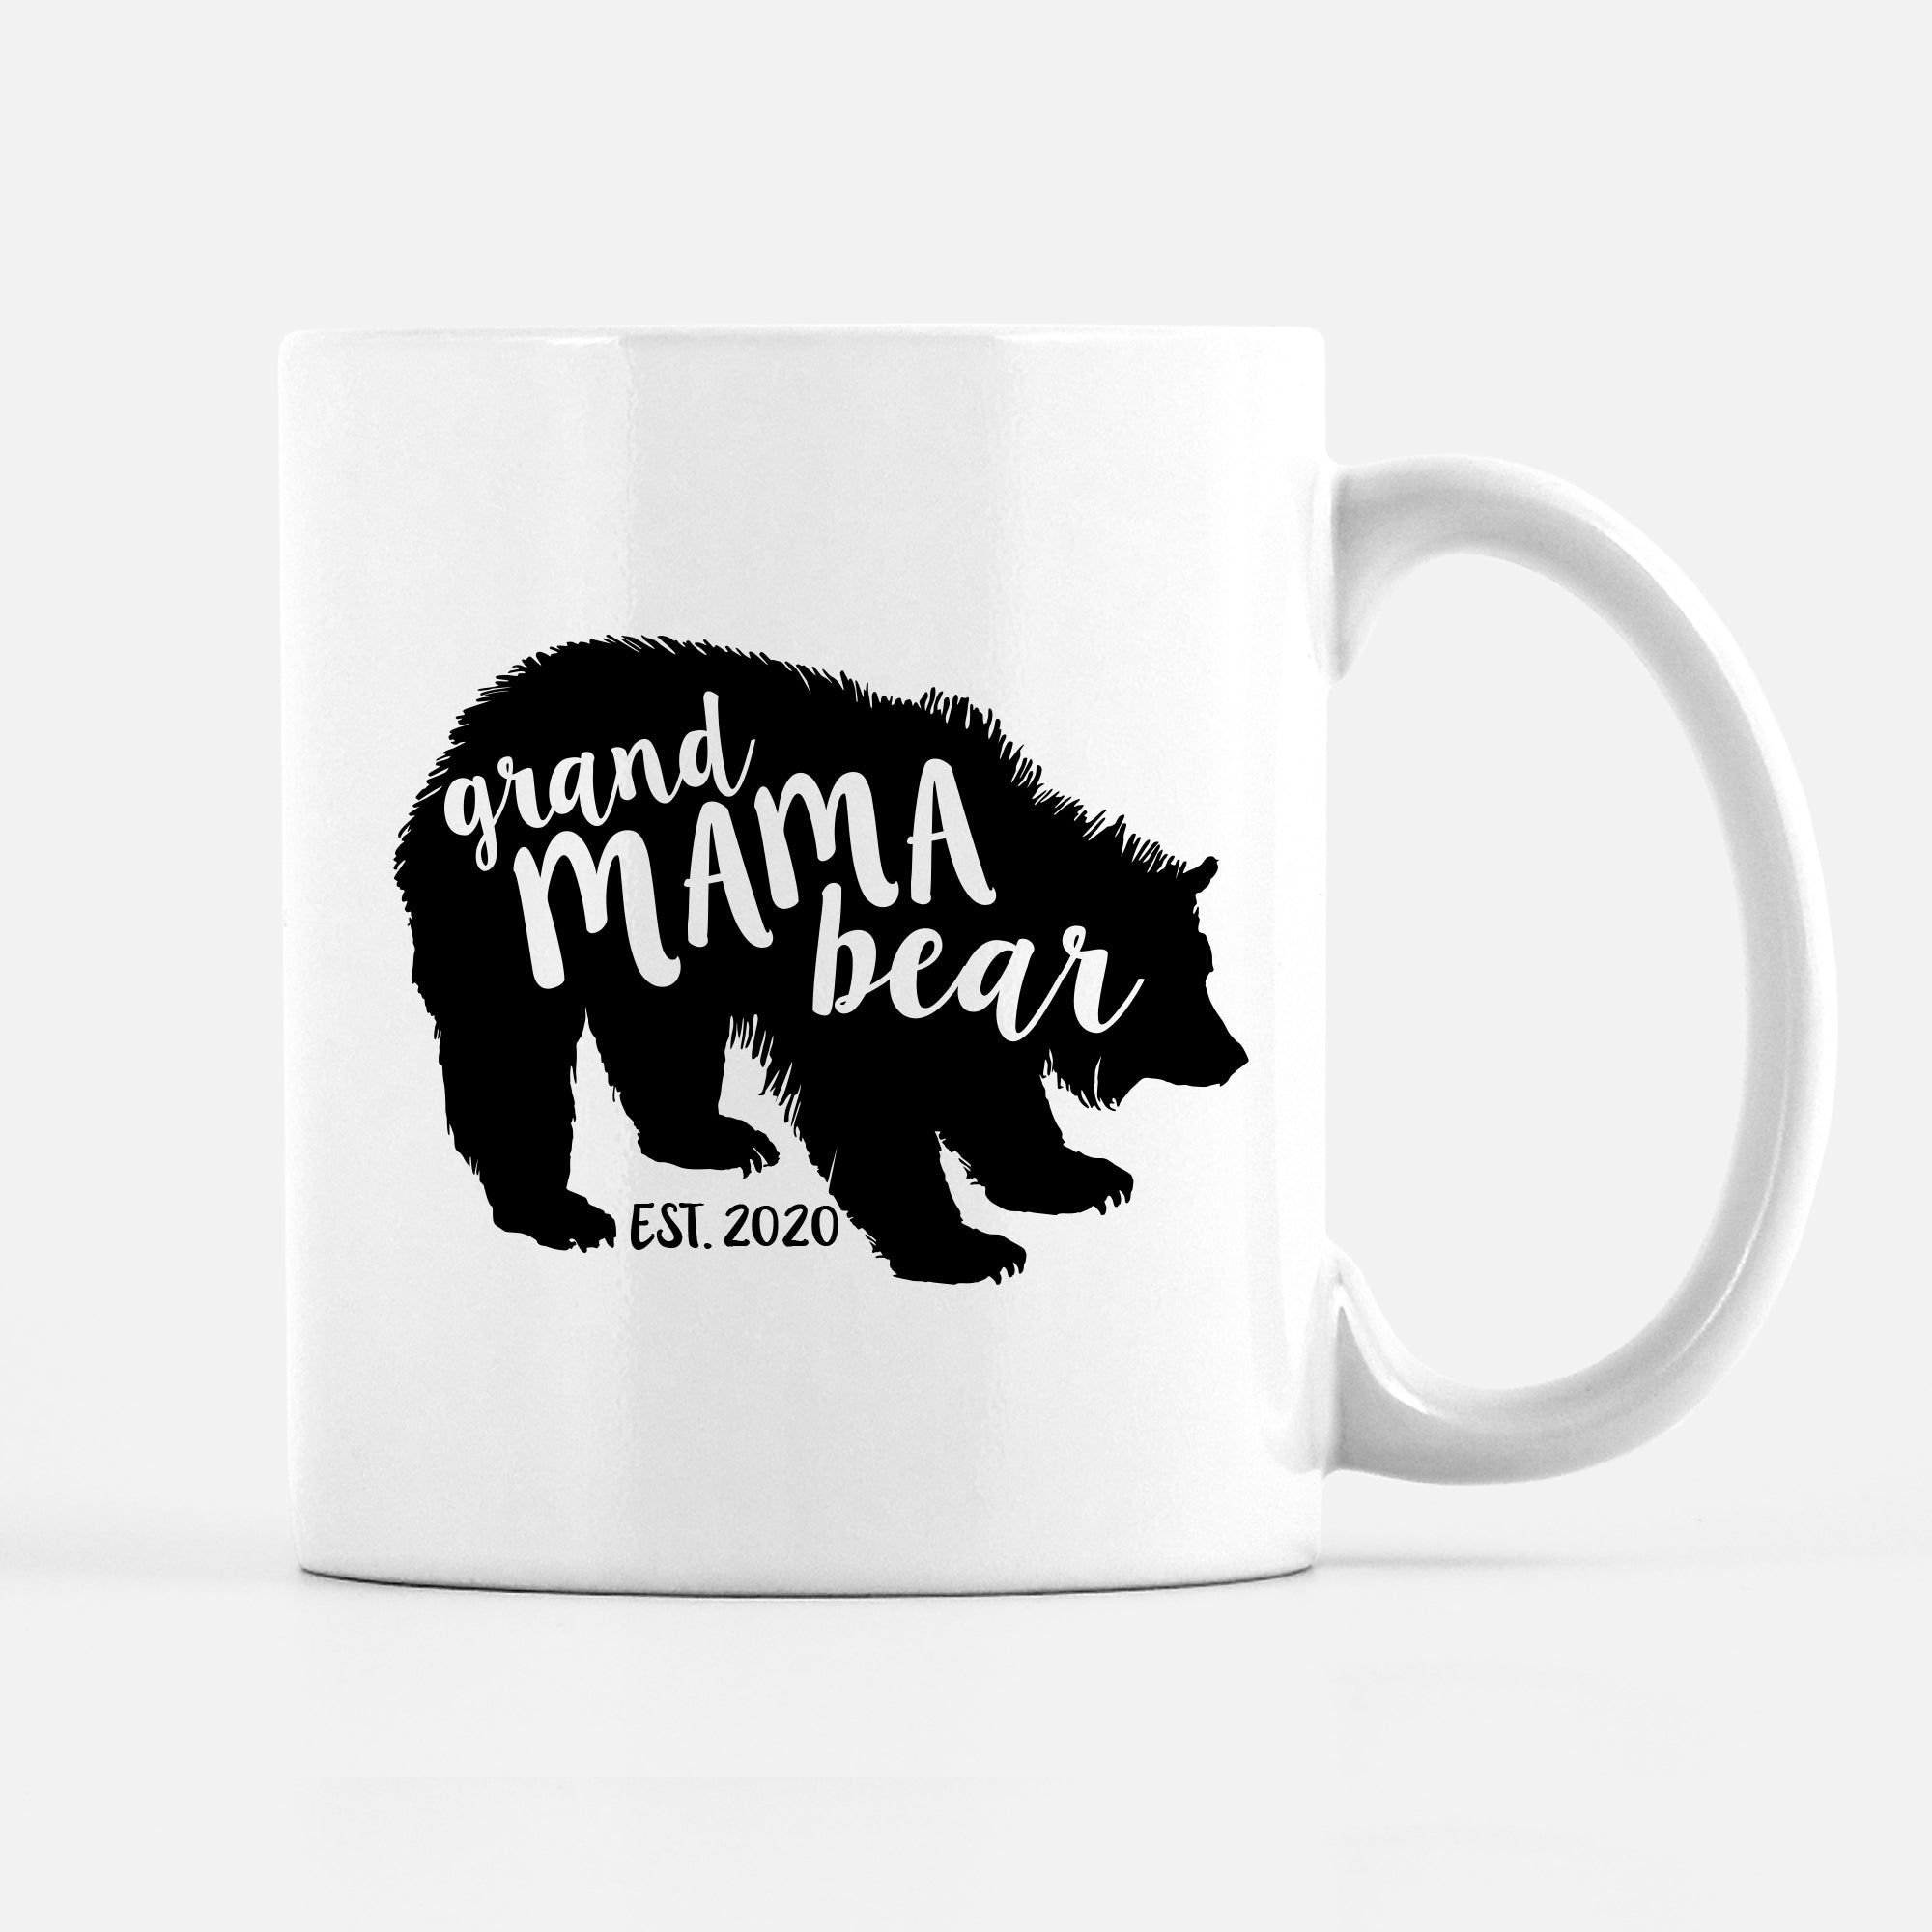 Grandmama Bear Mug | Mother's day gift for grandma | Pipsy.com, pregnancy announcement mug